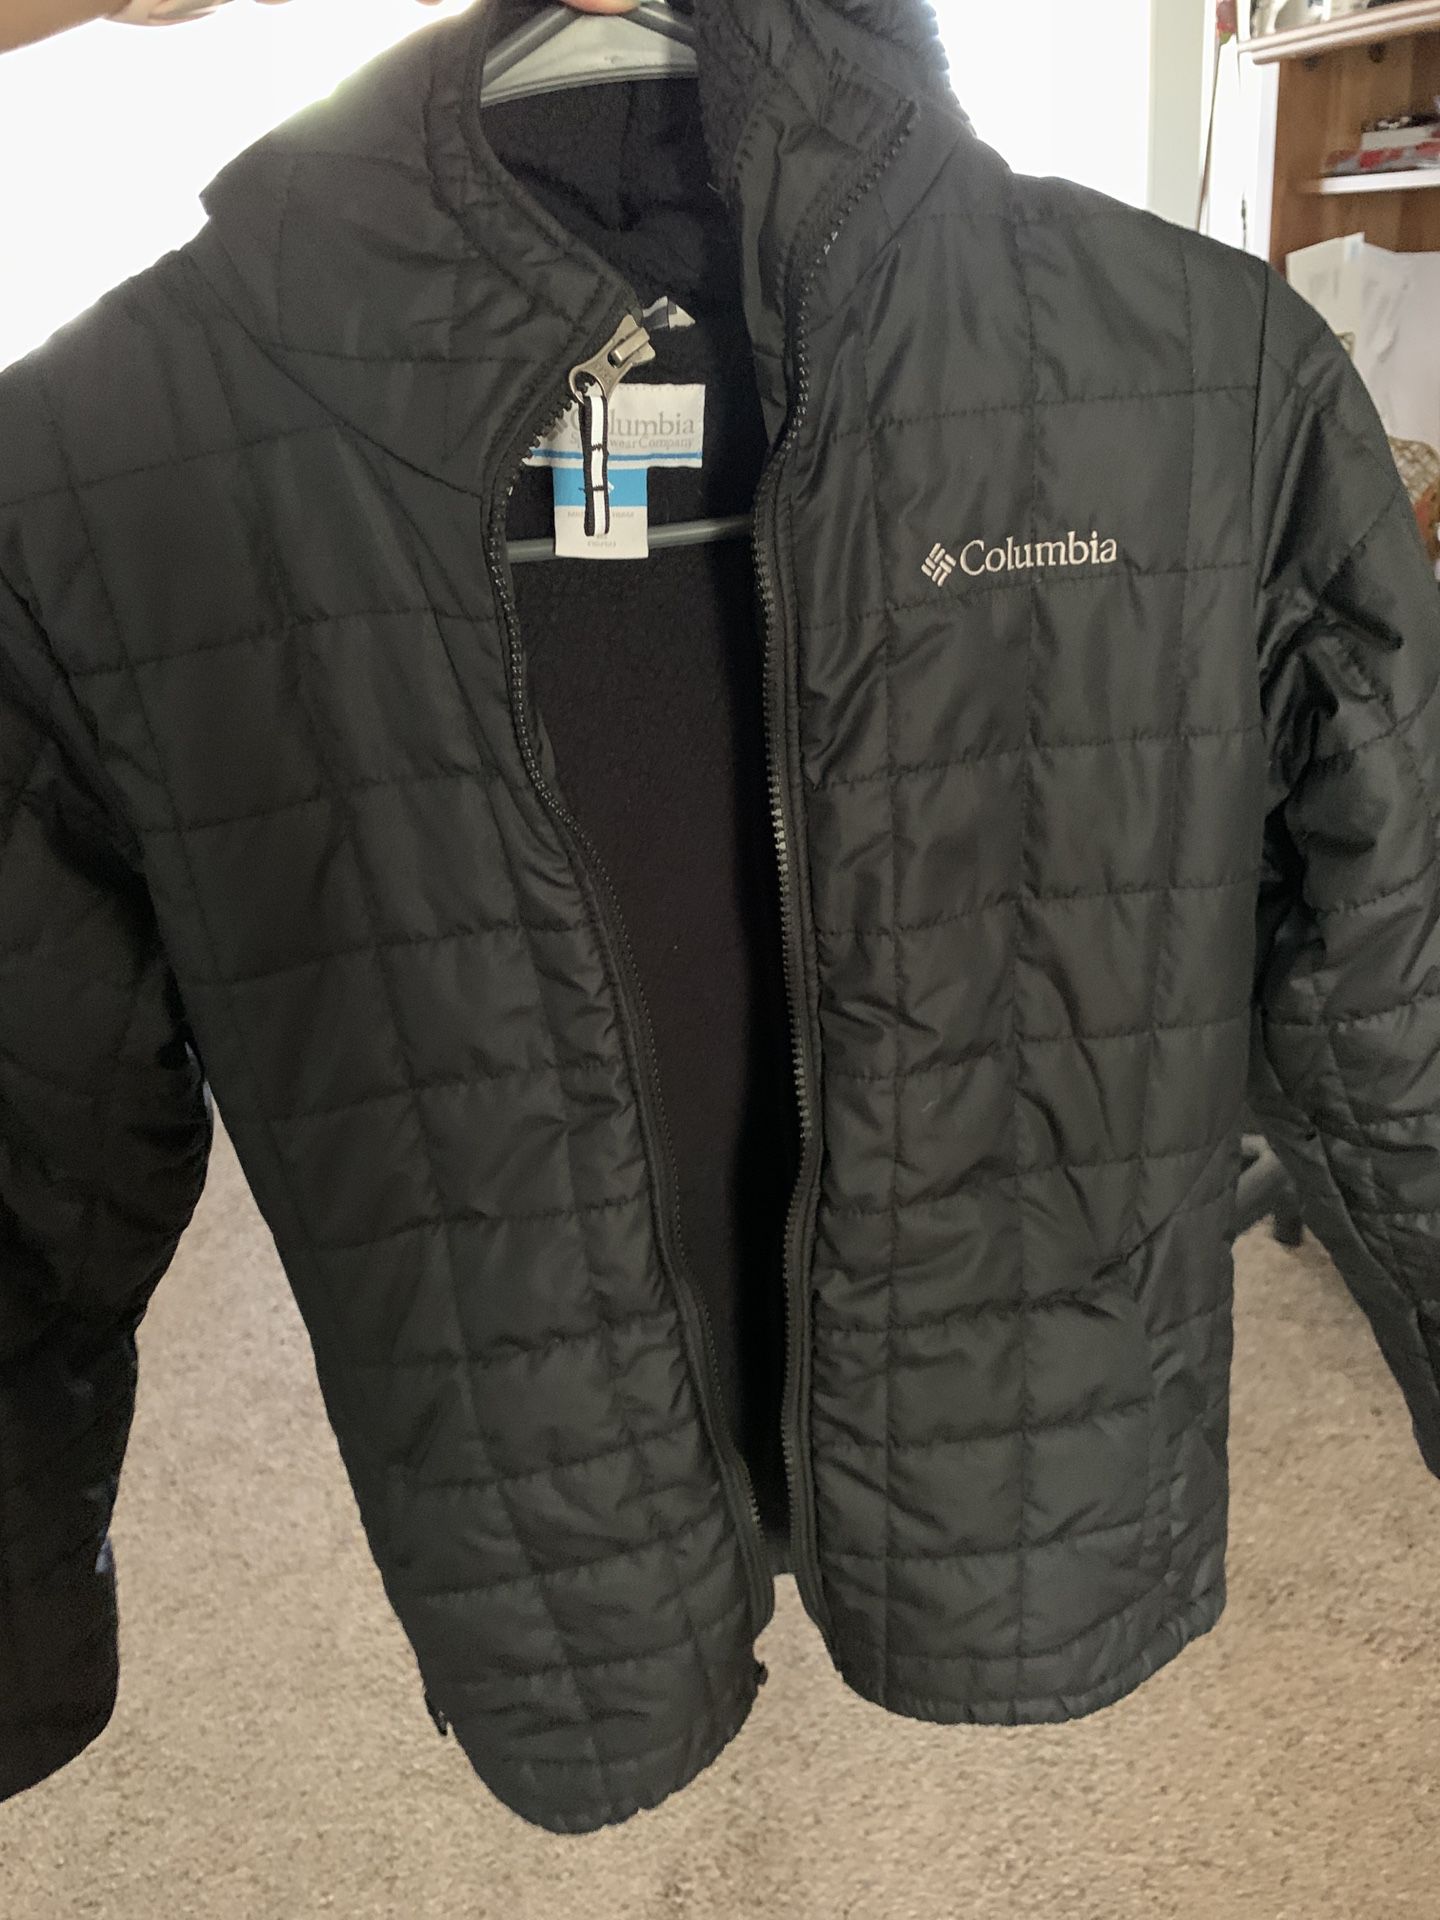 DISCOUNTED-Boys Columbia jacket